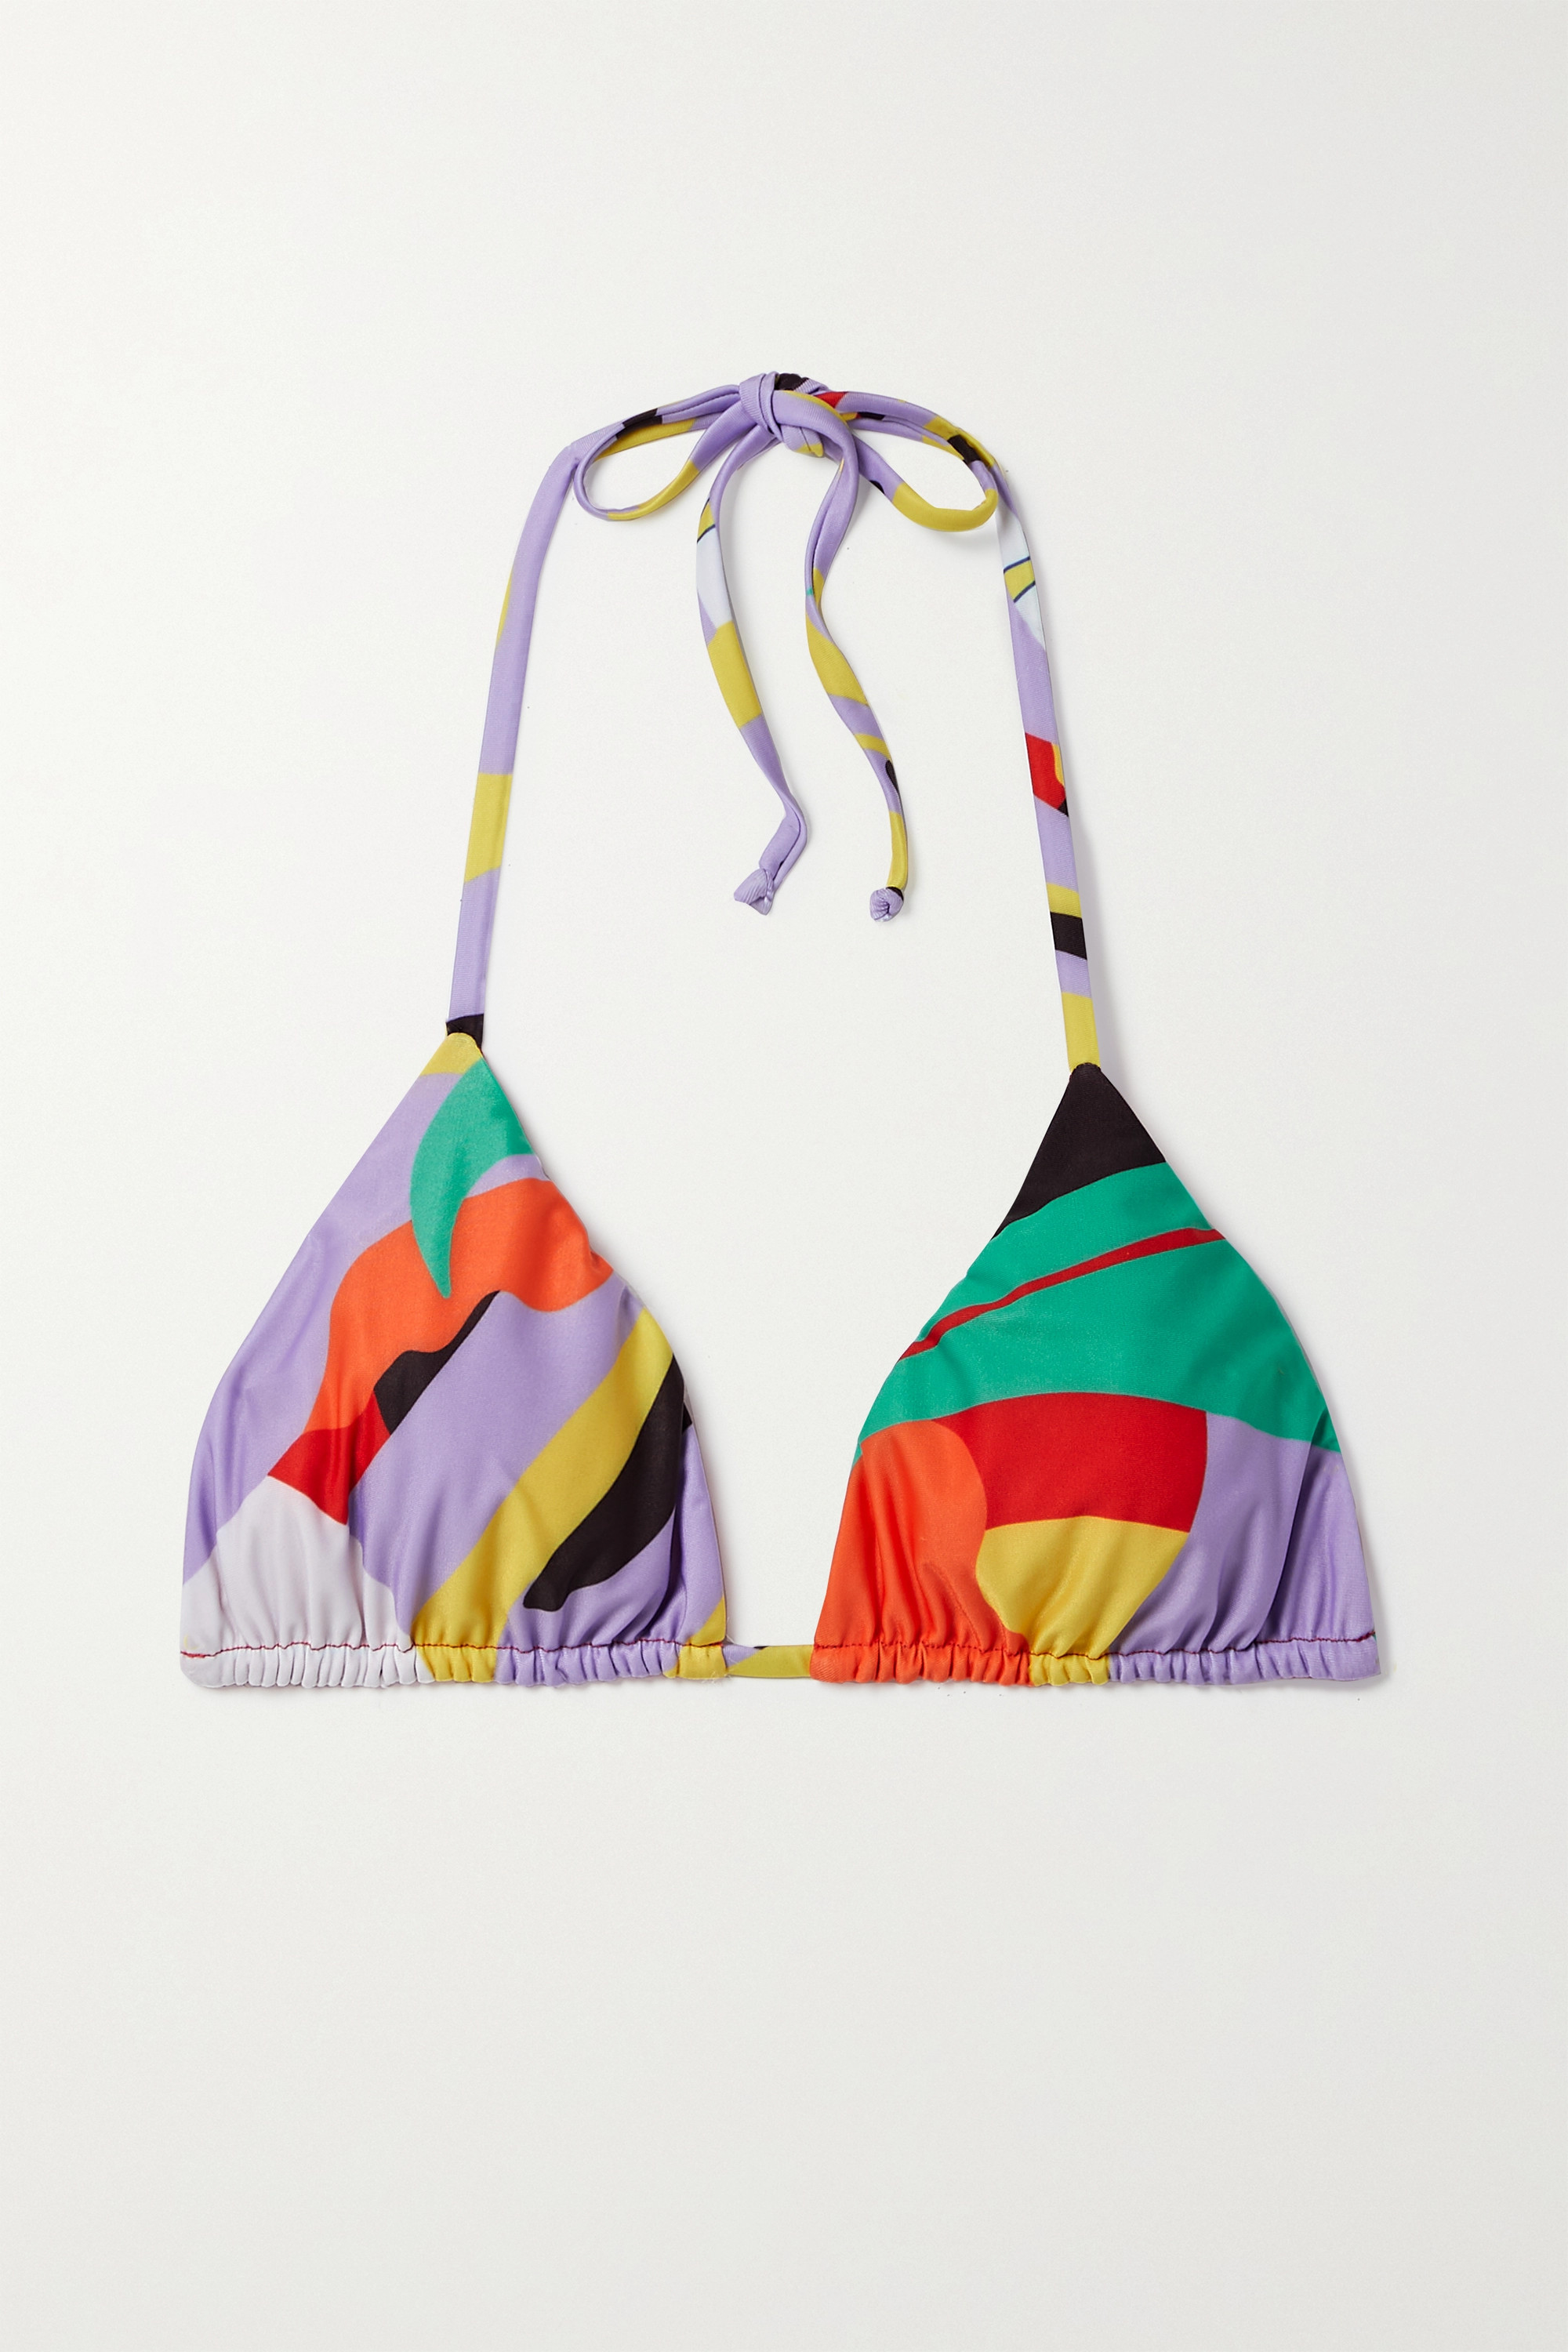 Mara Hoffman + Net Sustain Rae Printed Recycled Bikini Top